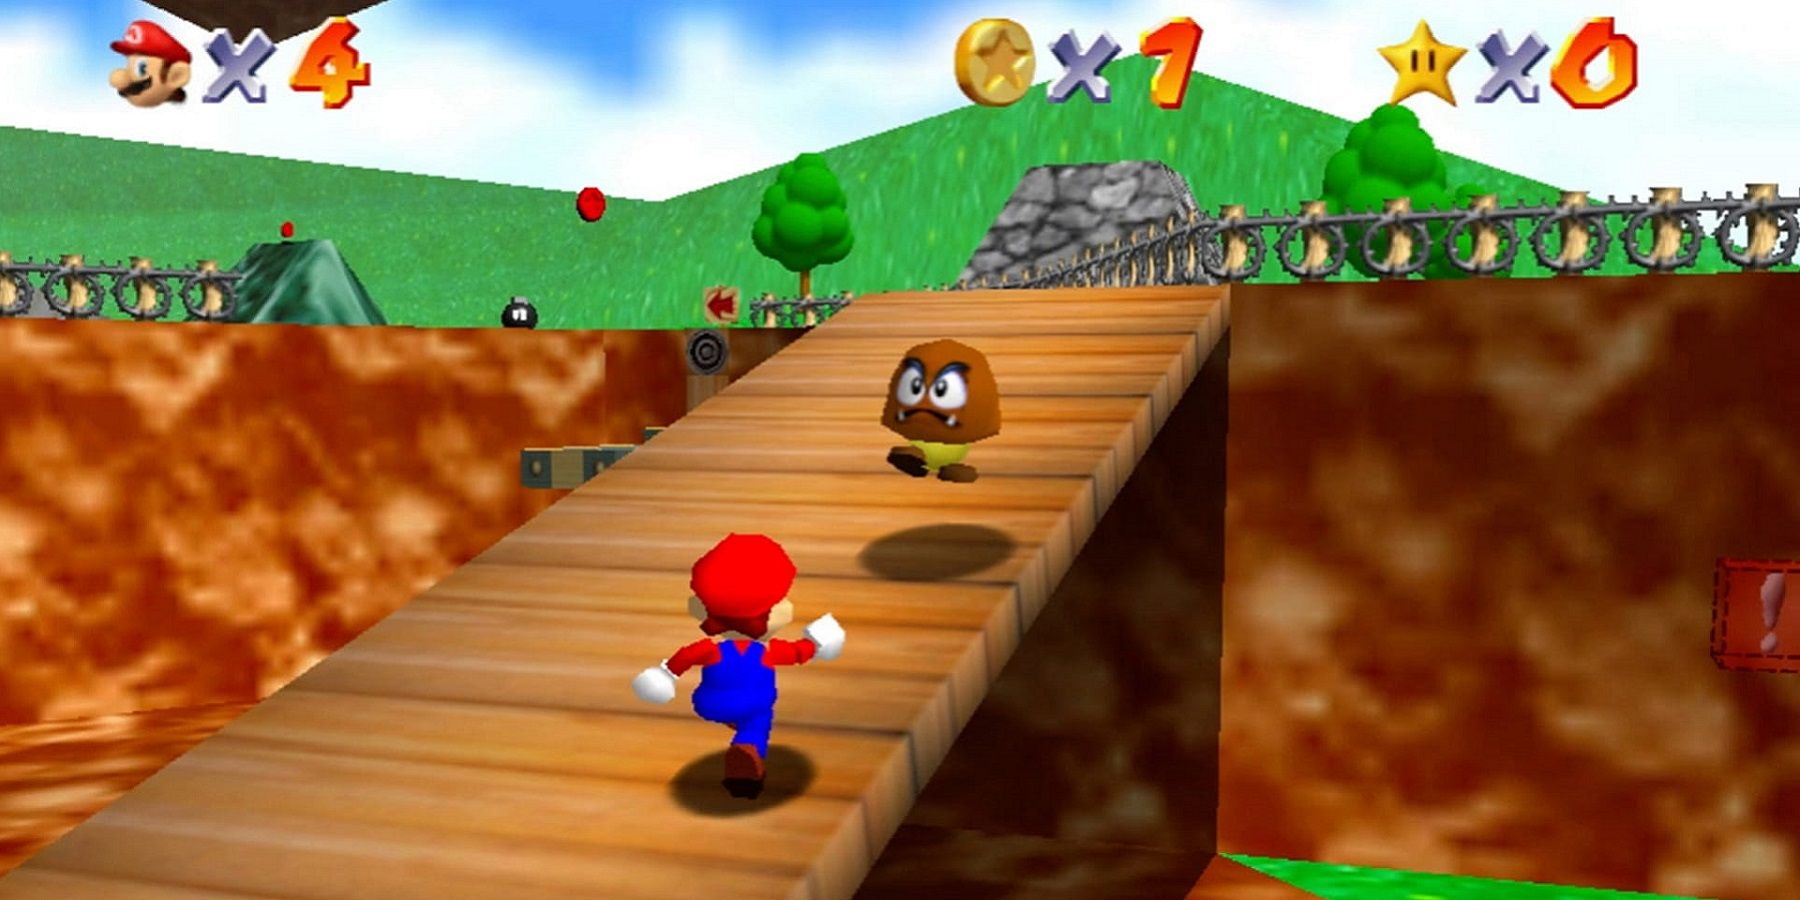 Screenshot from Super Mario 64 showing Mario running towards a Goomba.